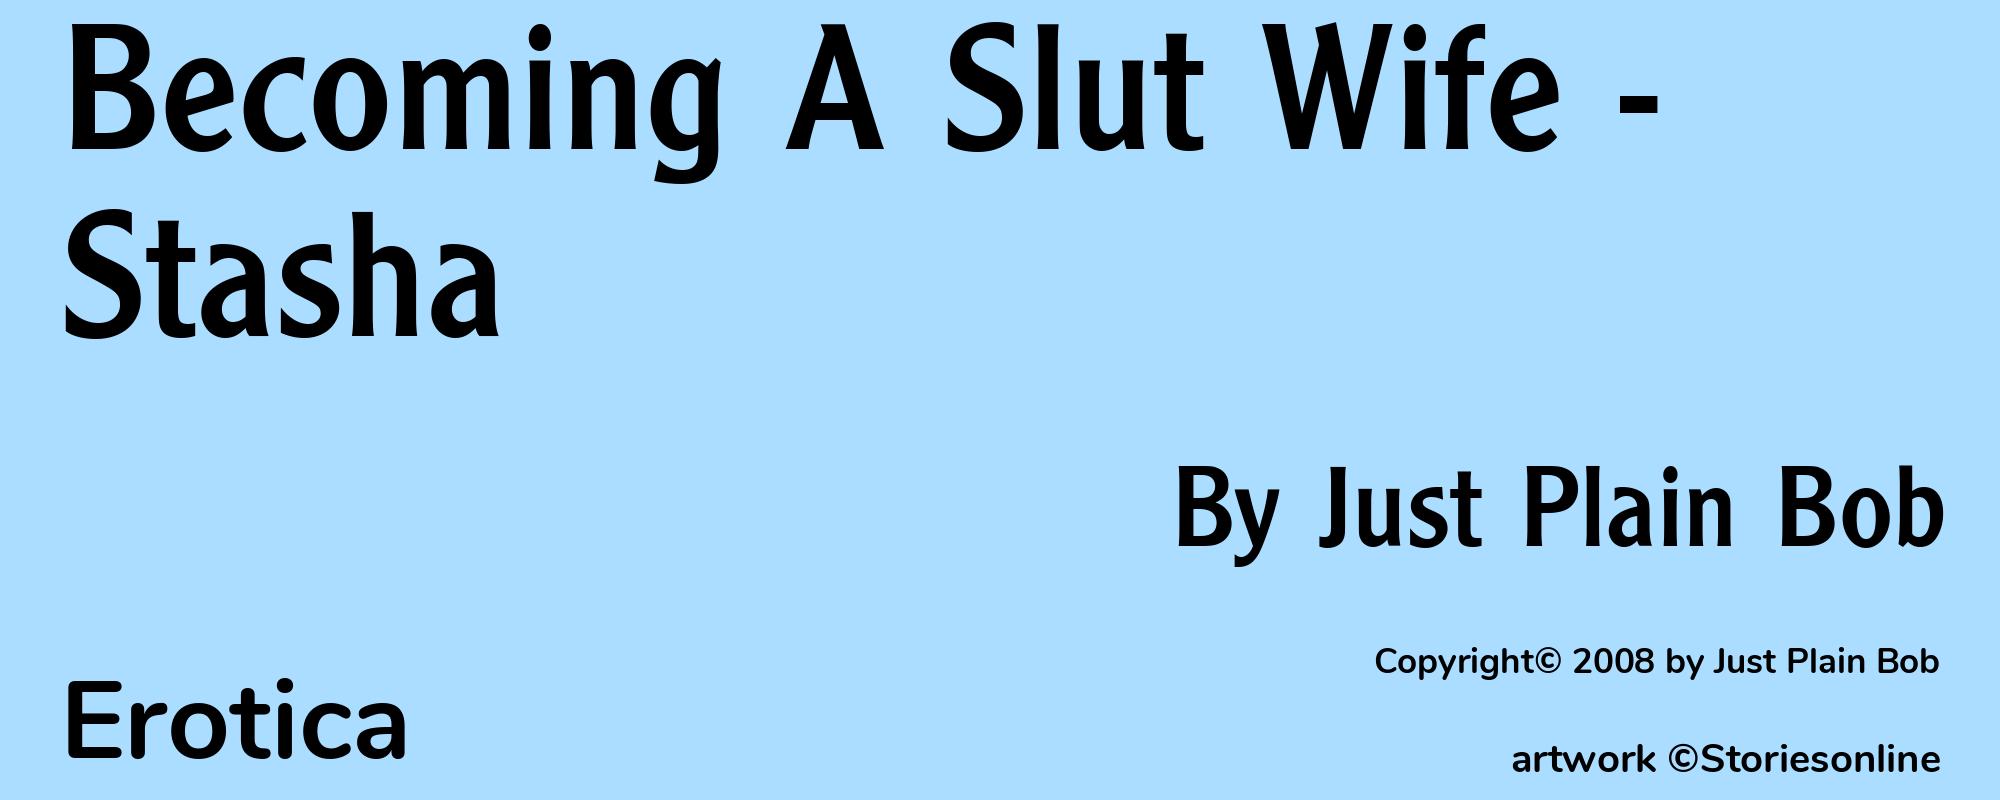 Becoming A Slut Wife - Stasha - Cover